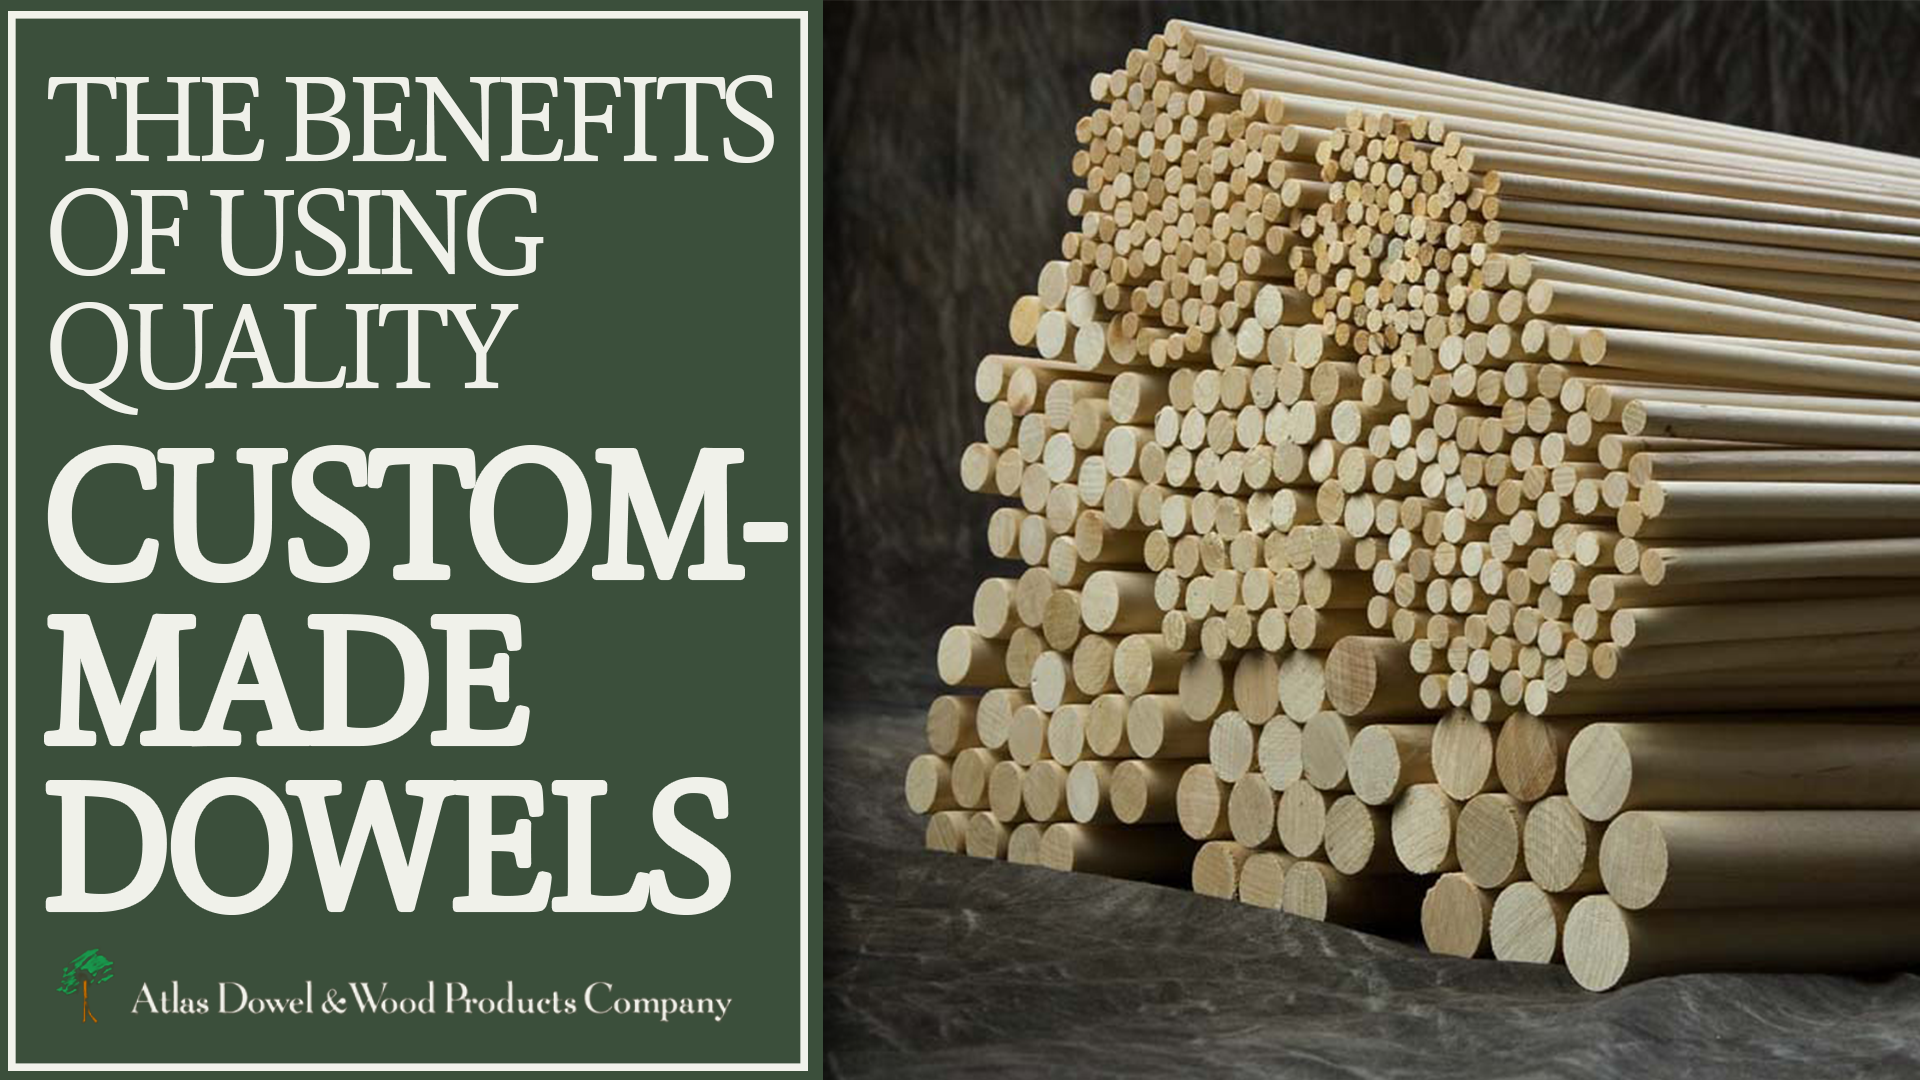 The Benefits of Using Quality Custom-Made Dowels